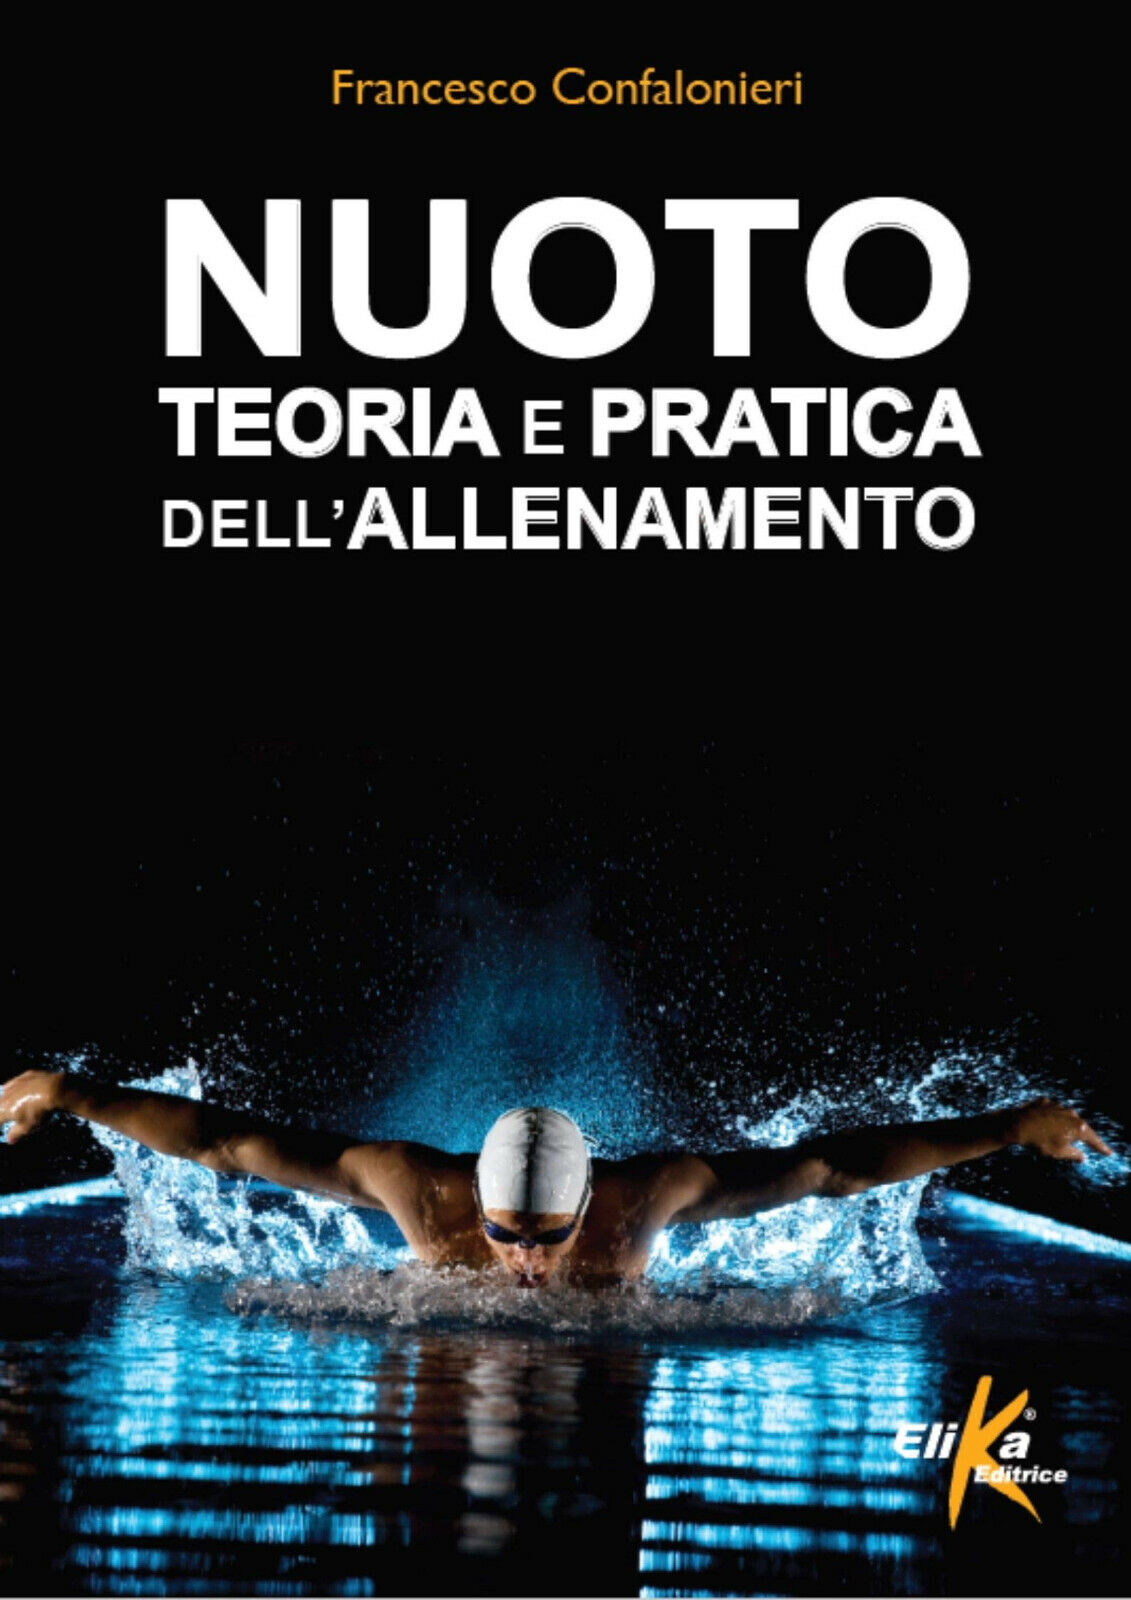 Nuoto. Teoria e pratica dell'allenamento - Francesco Confalonieri - Elika, 2015